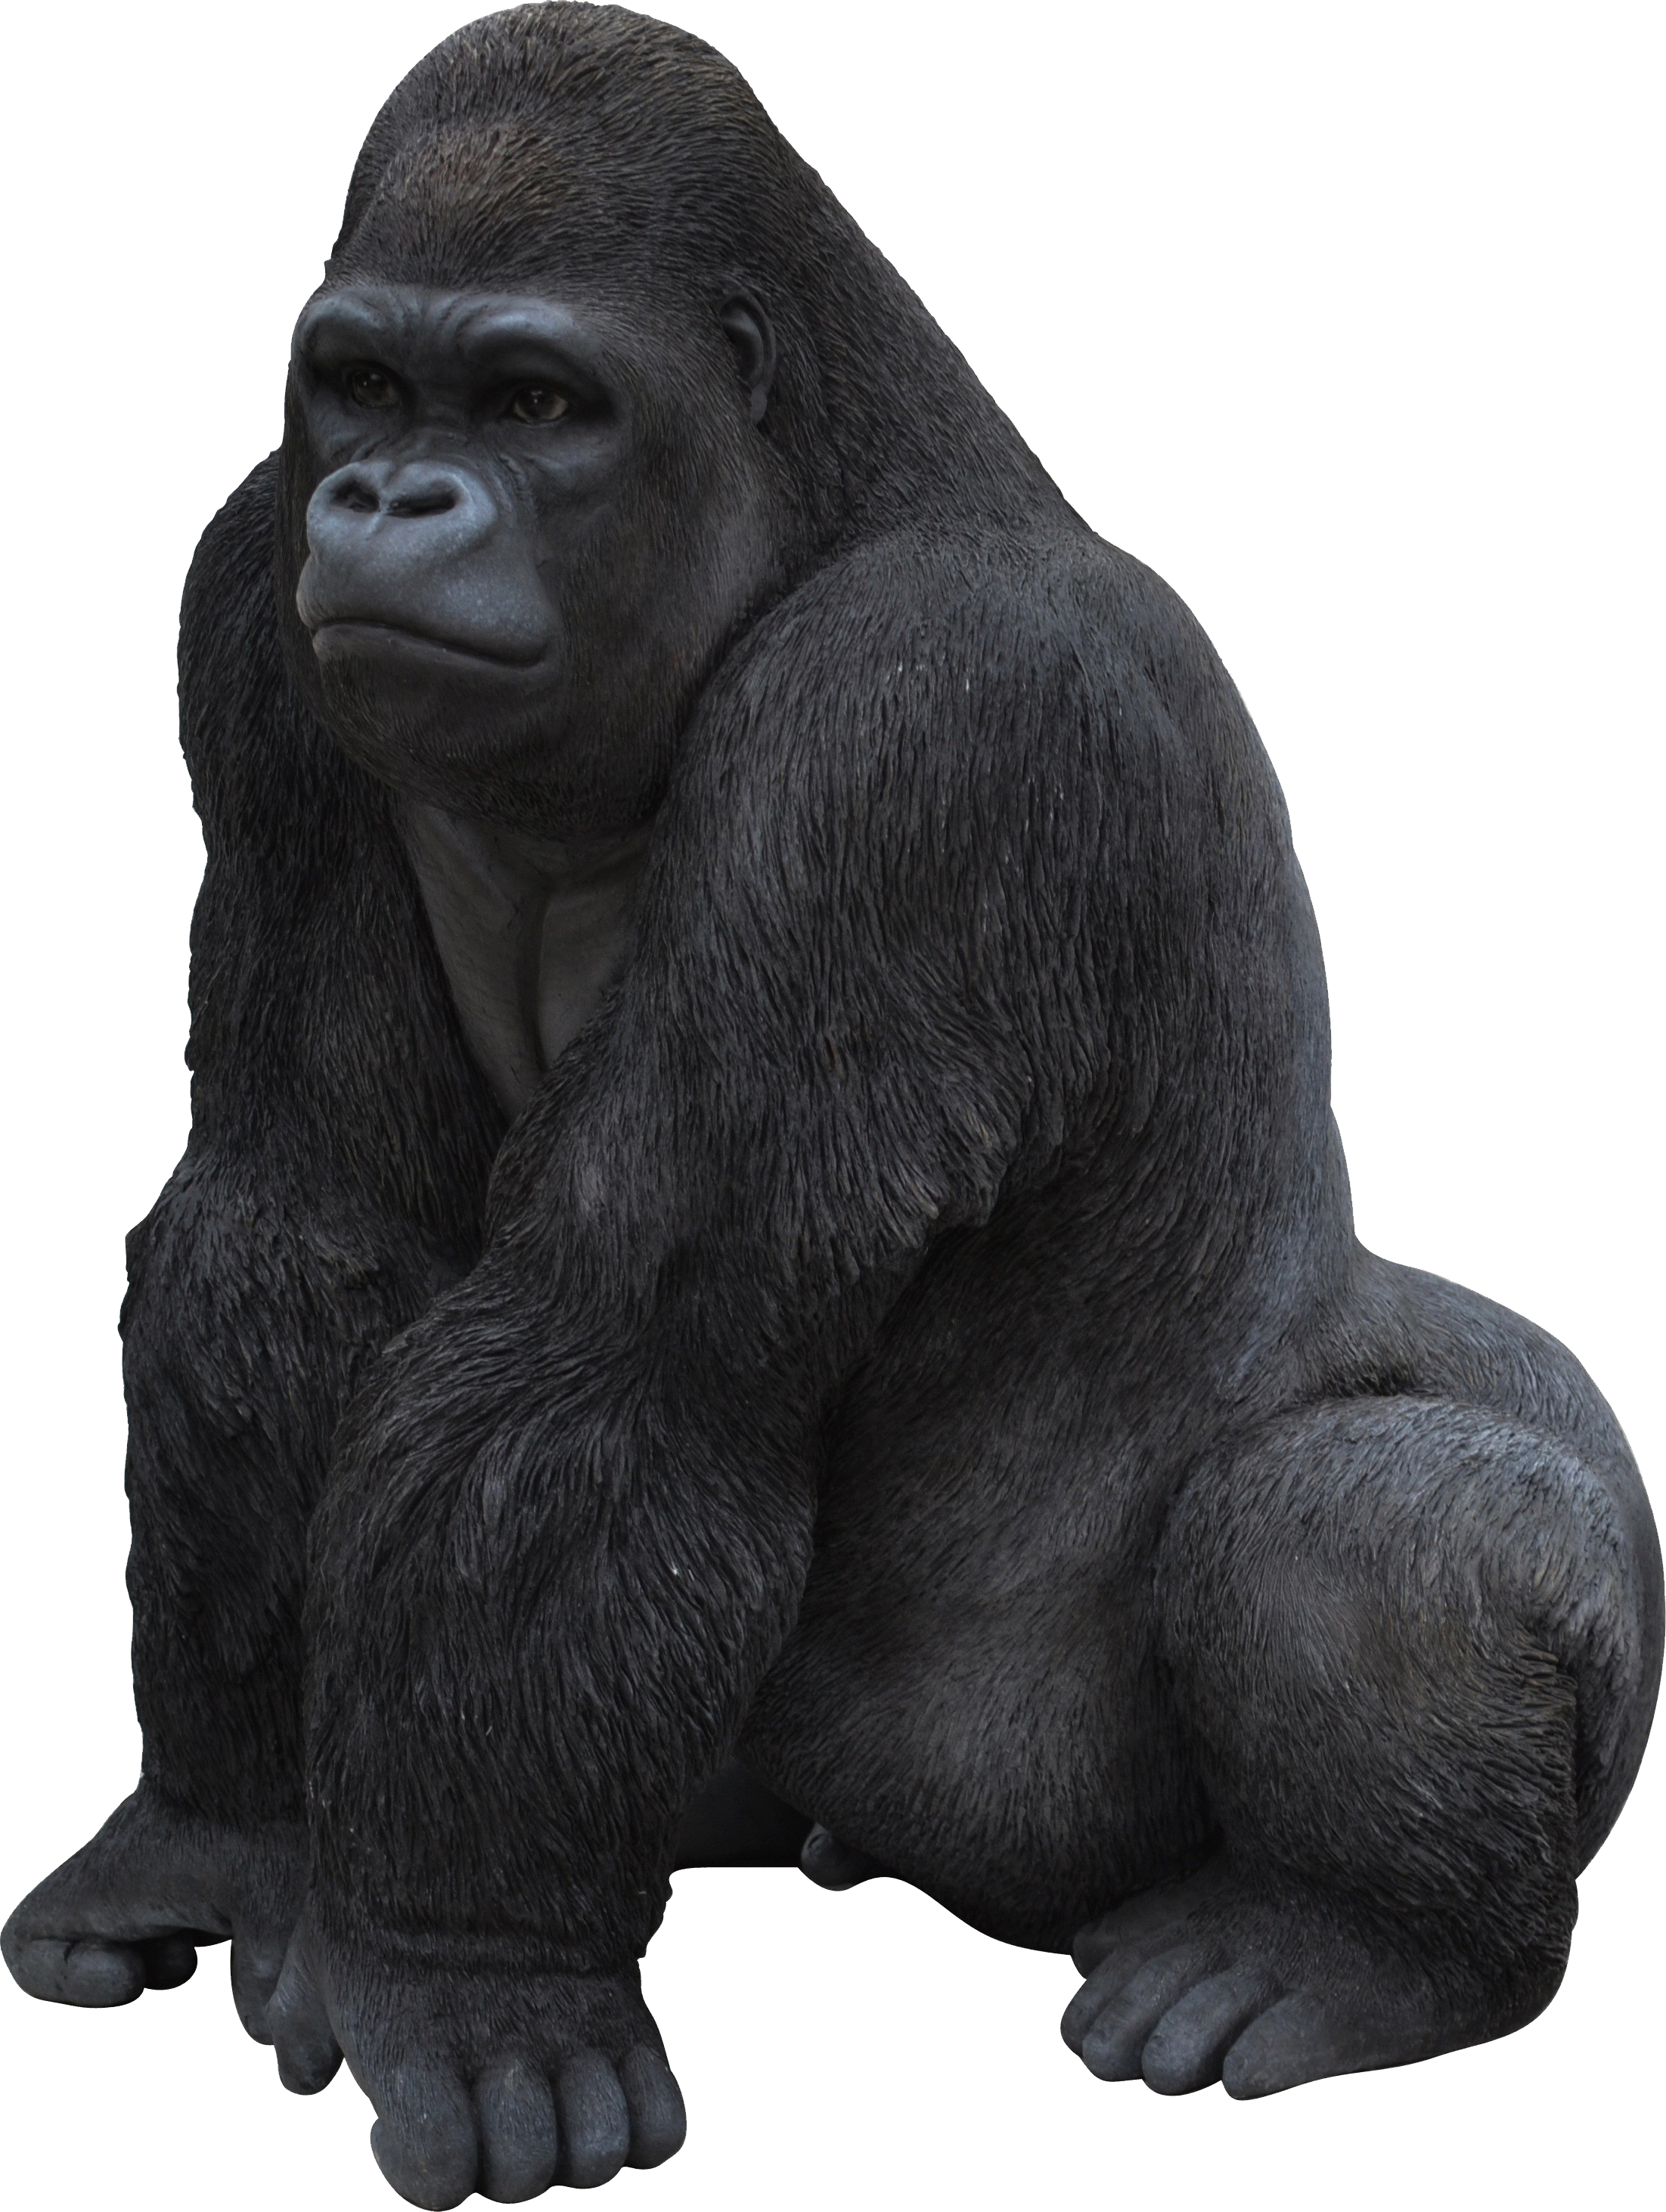 PNG File Name: Gorilla Transp